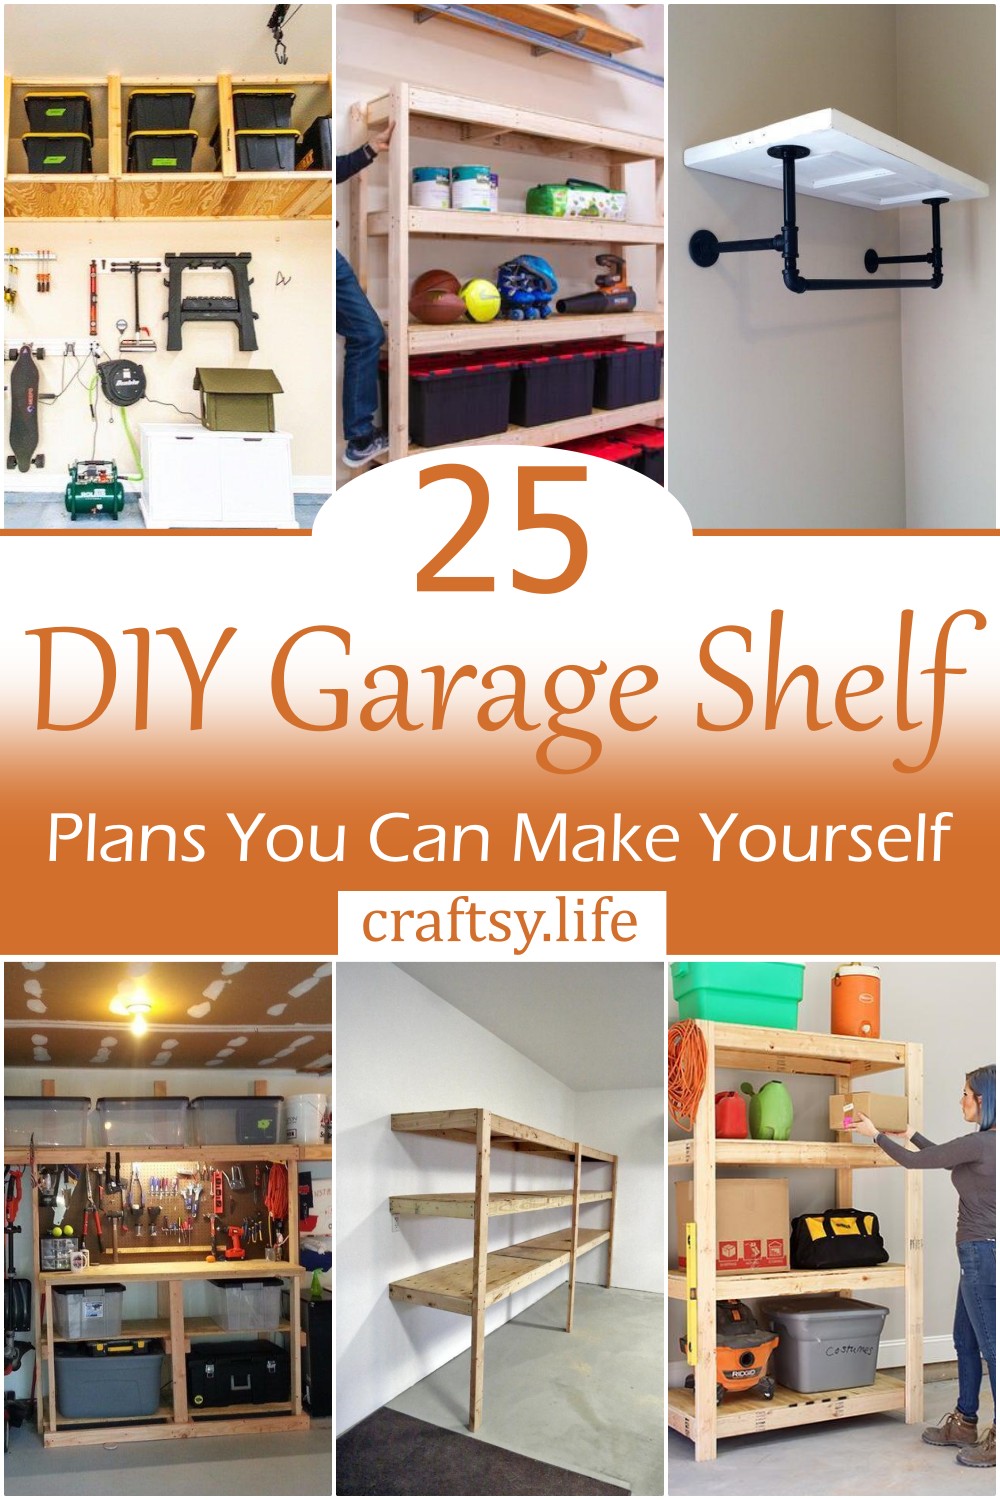 DIY Garage Shelf Plans 1